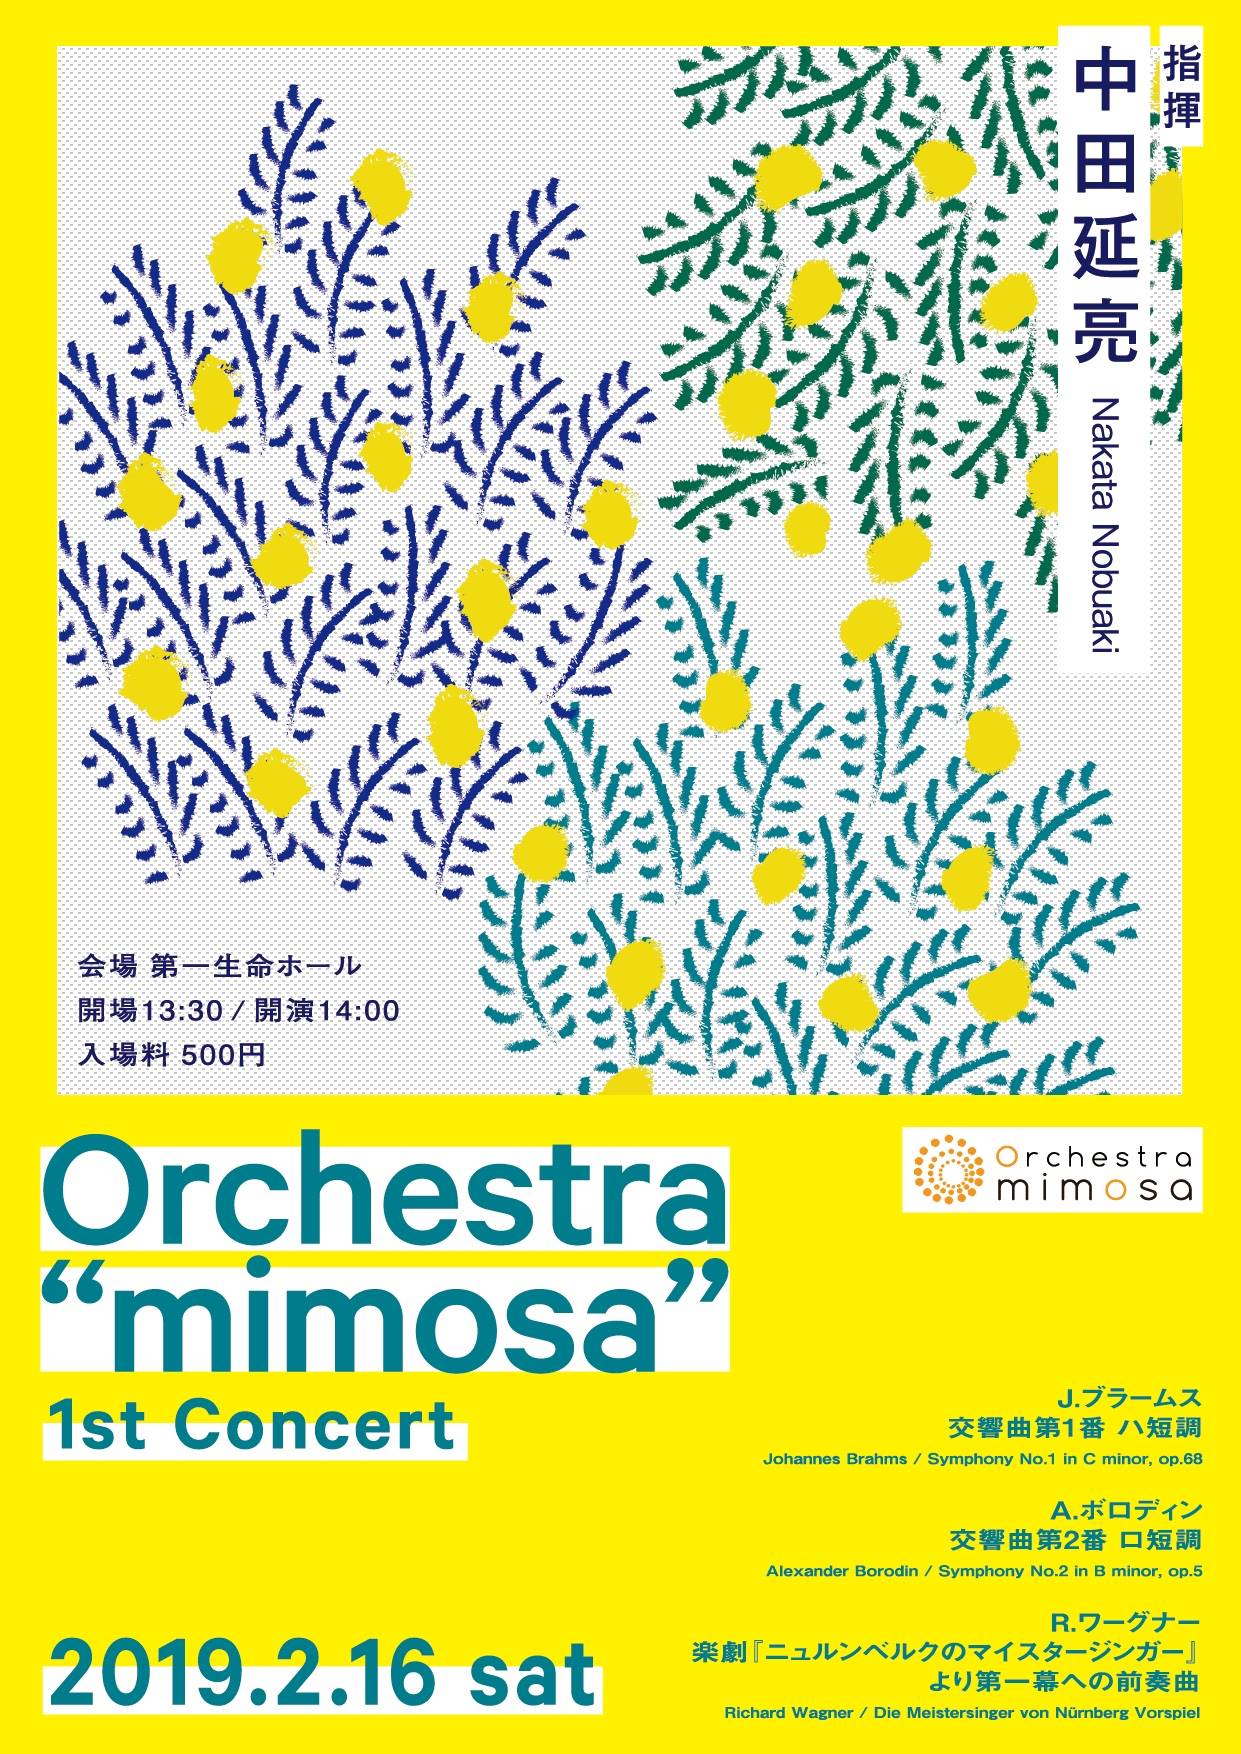 Orchestra “mimosa” 